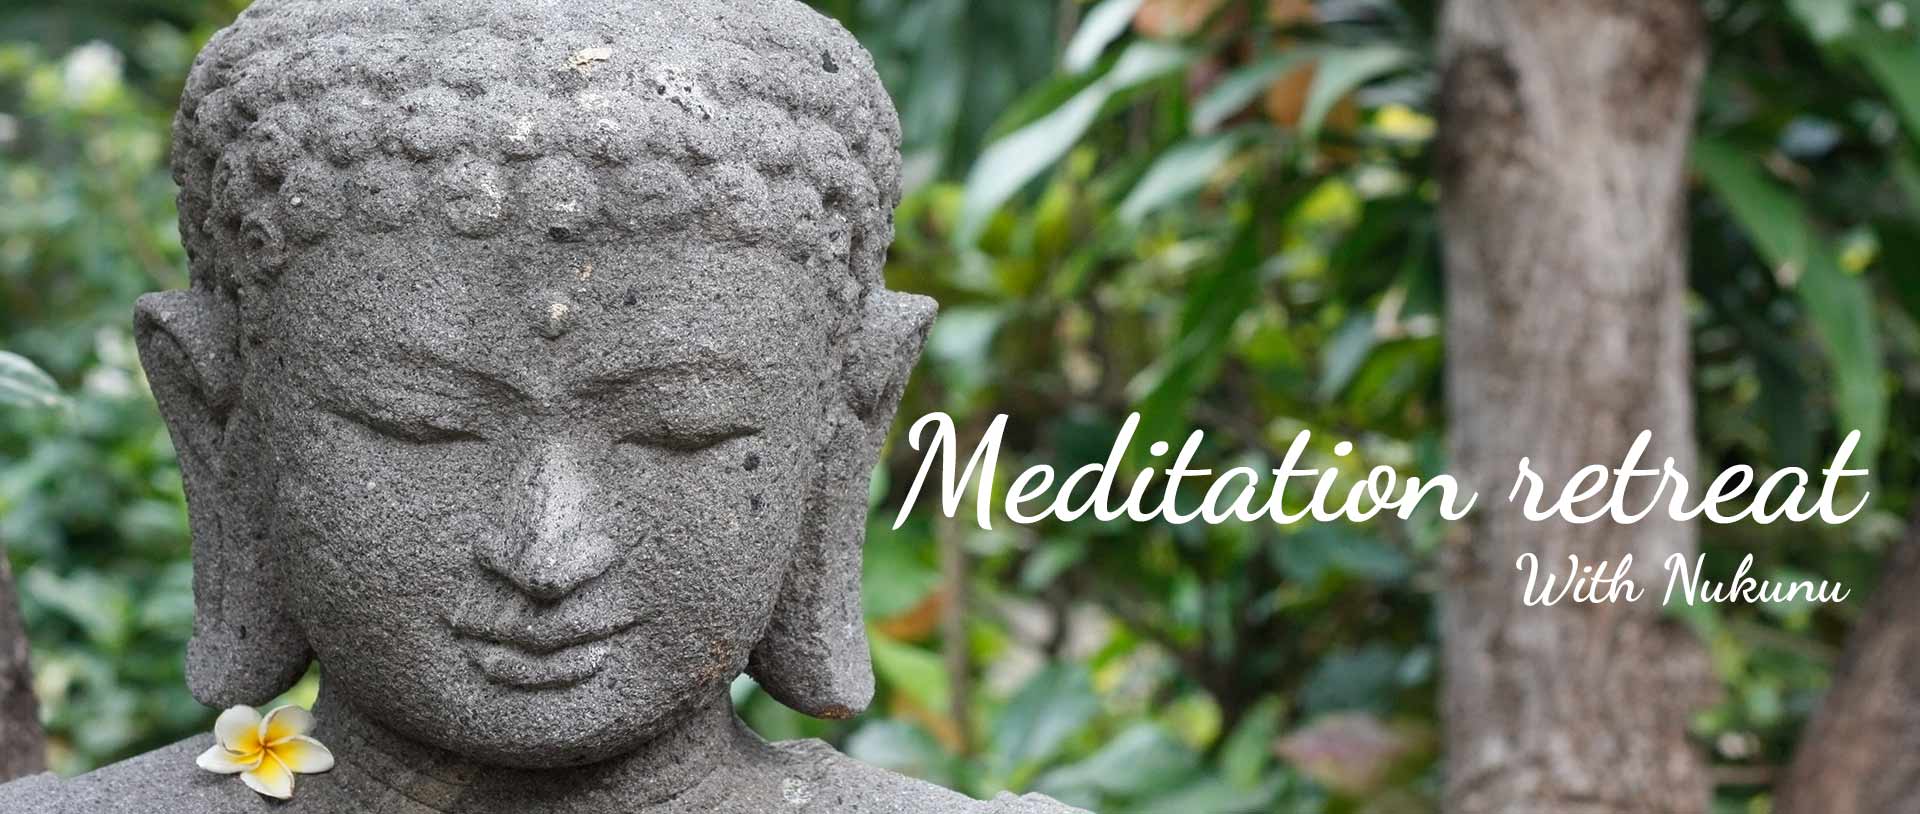 Meditation retreat